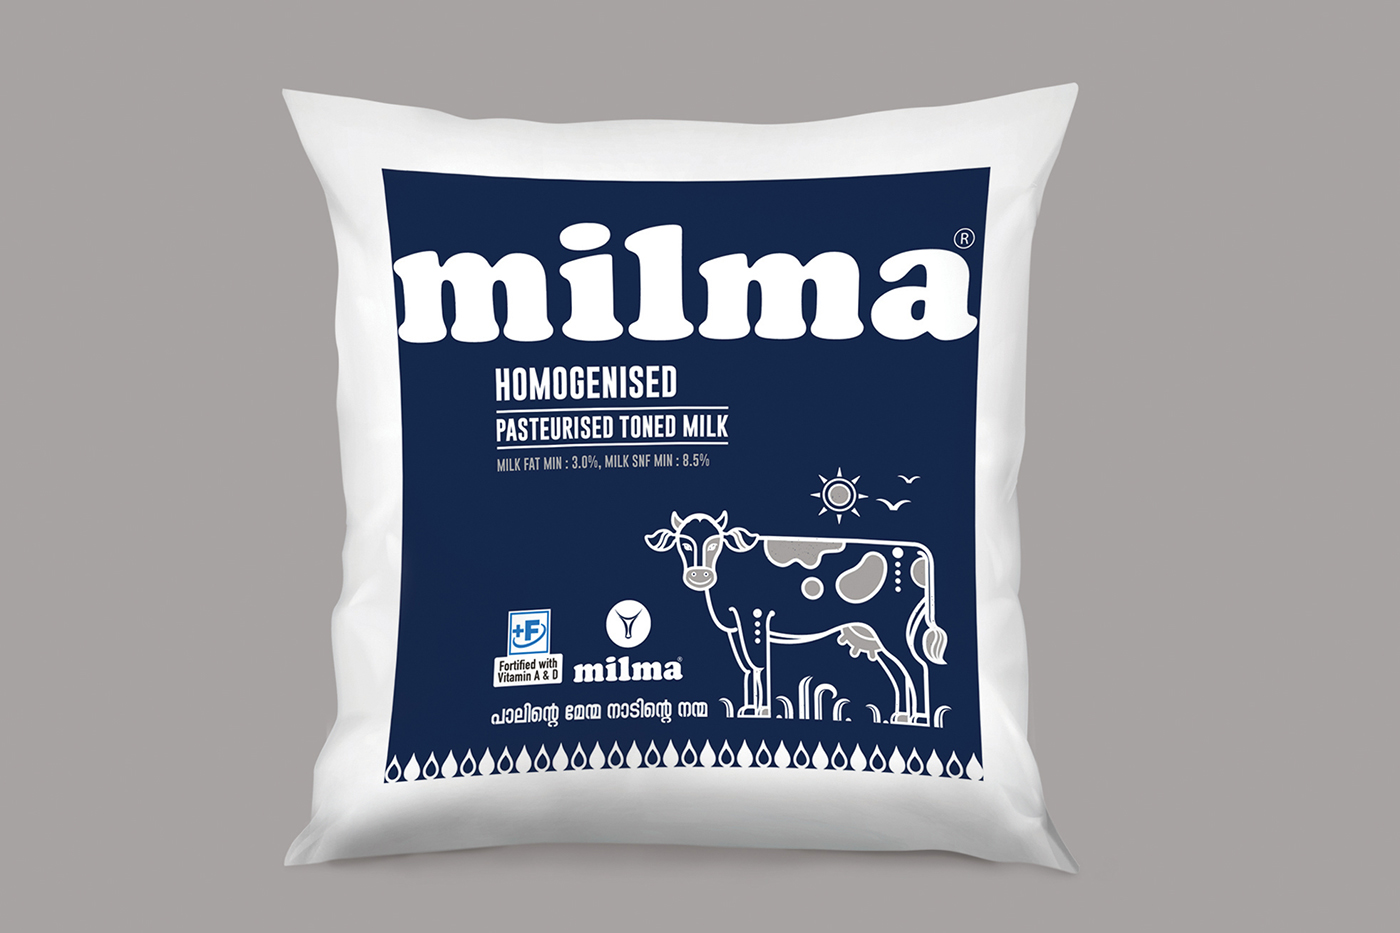 milma milk packaging - stark communications